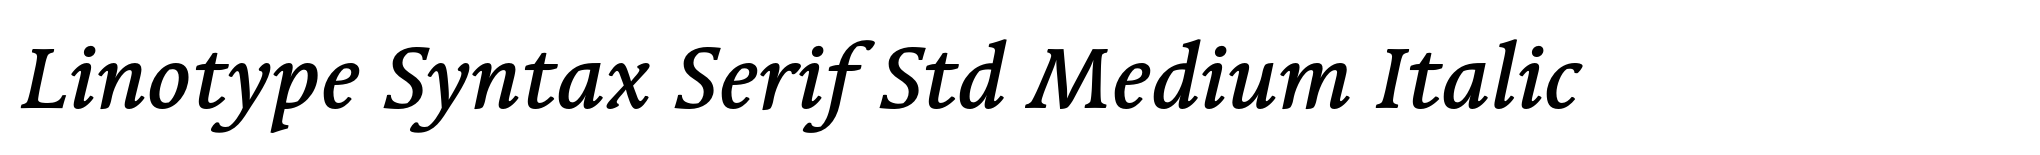 Linotype Syntax Serif Std Medium Italic image